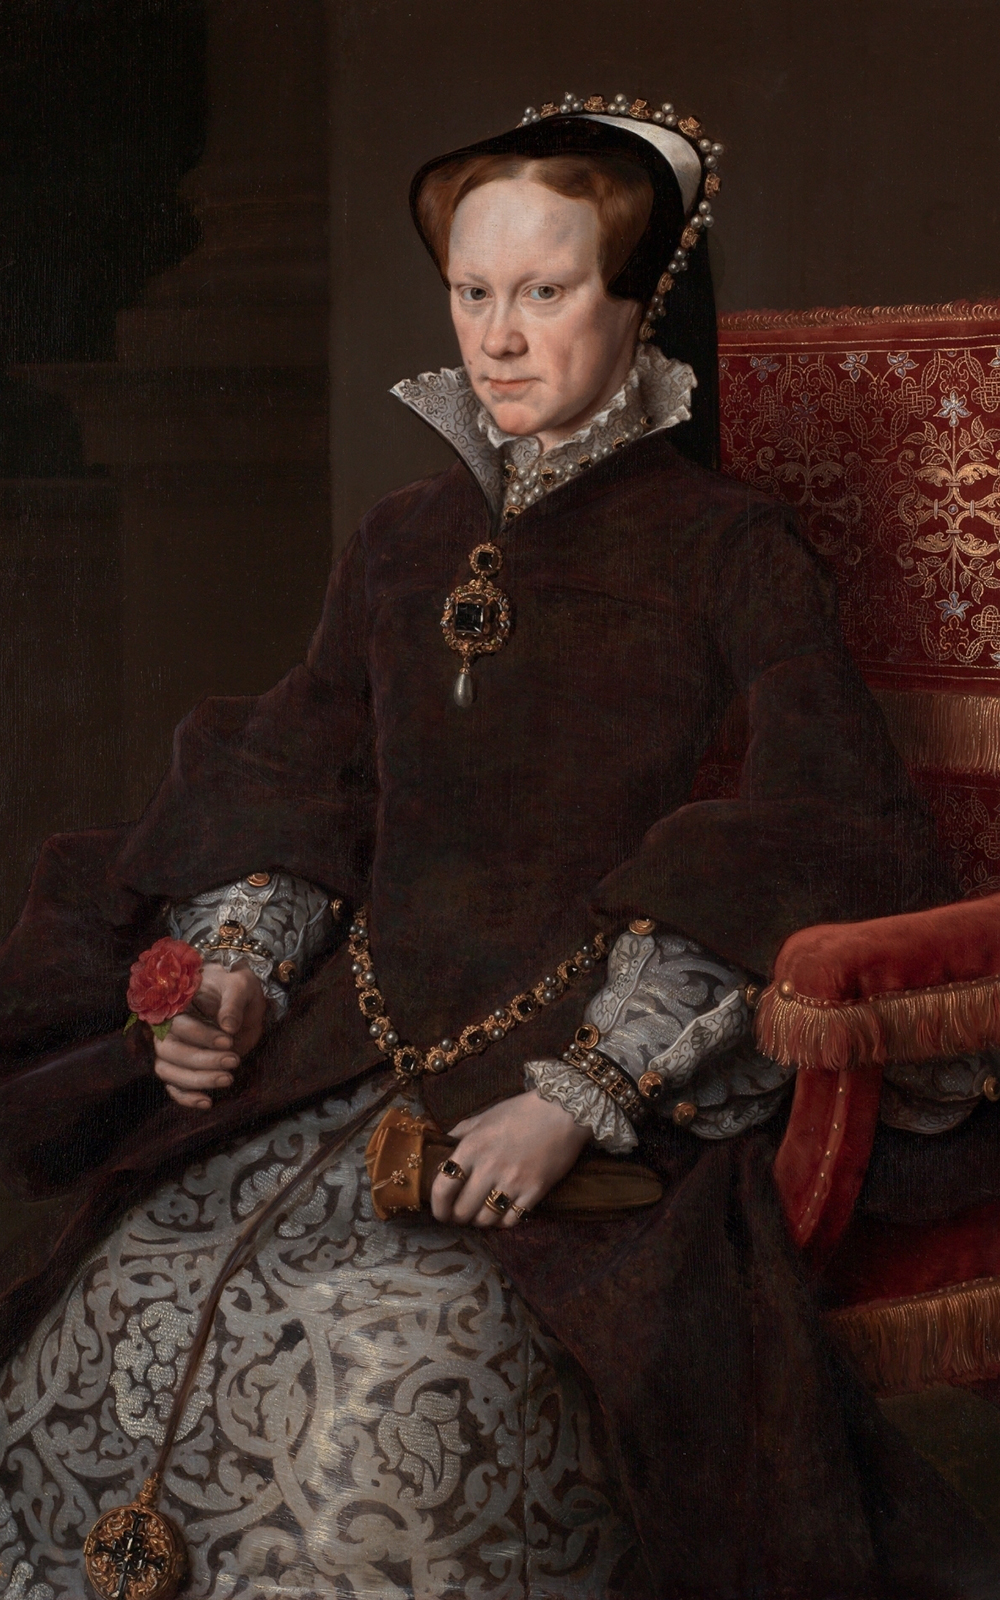 A portrait of Mary Tudor